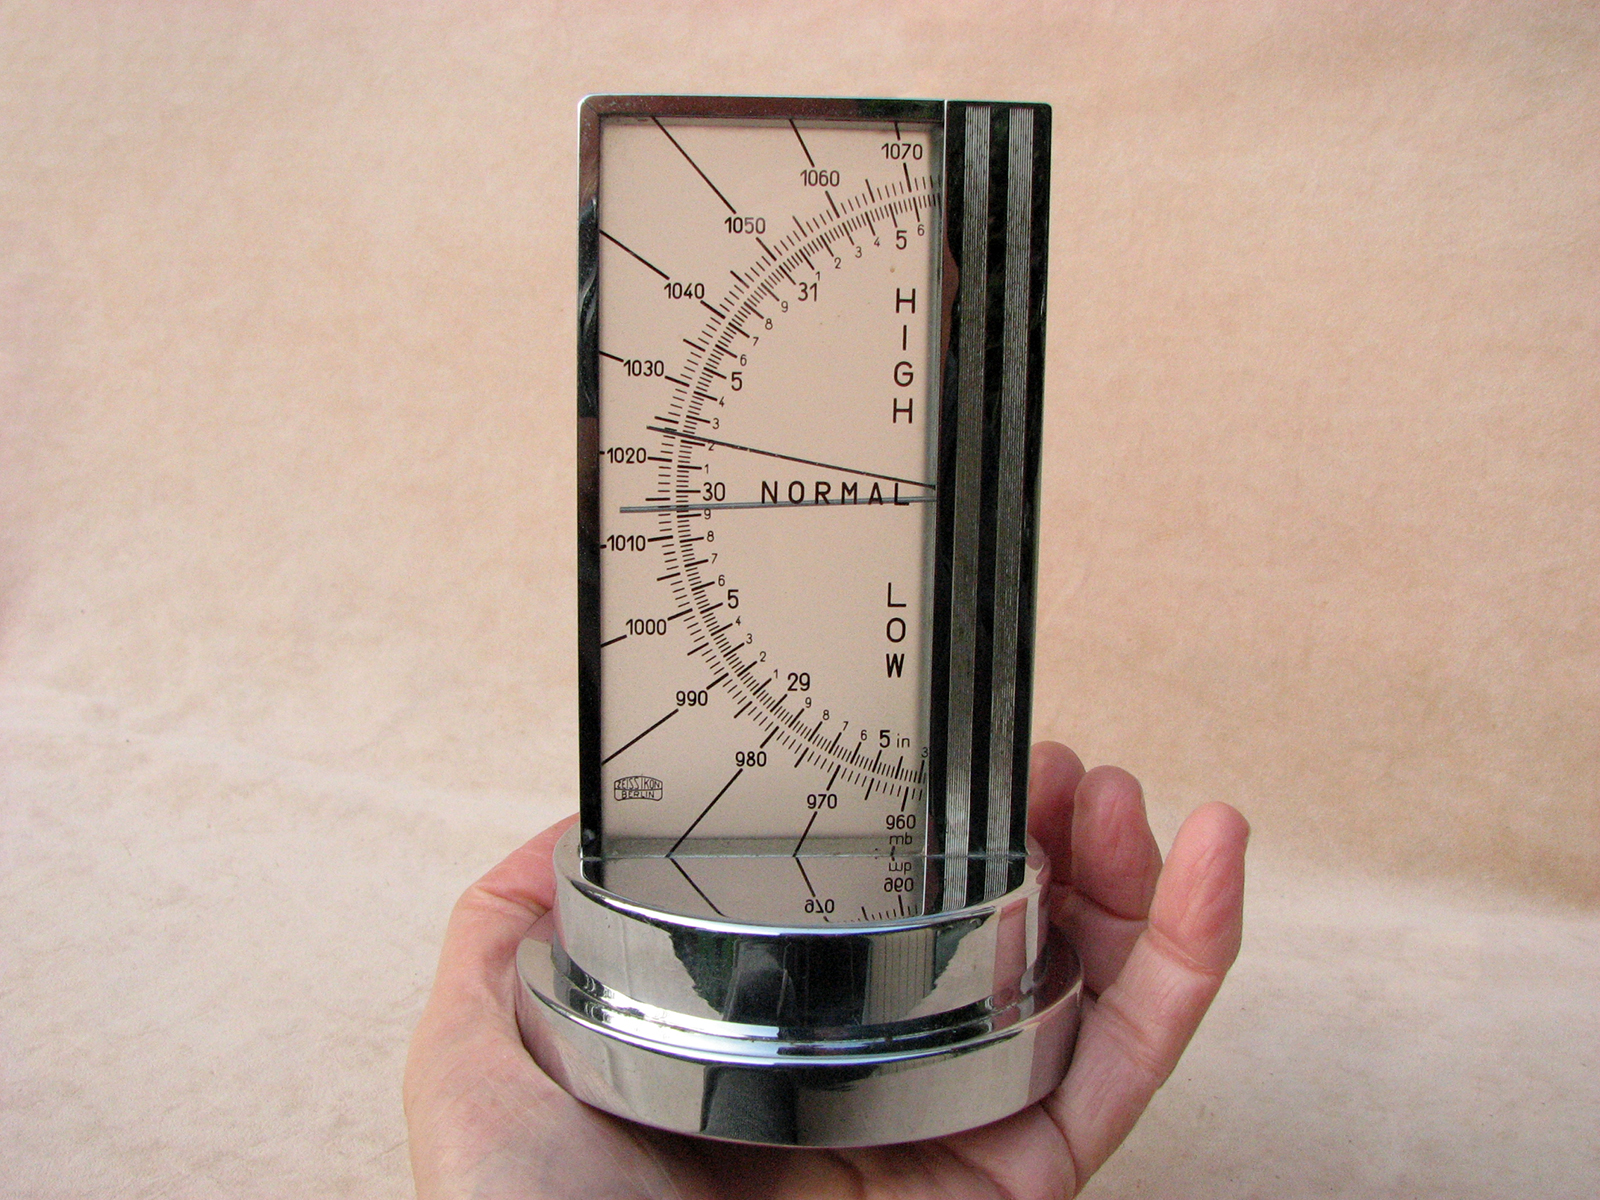 Rare 1930s Zeiss Ikon Art Deco period desk barometer